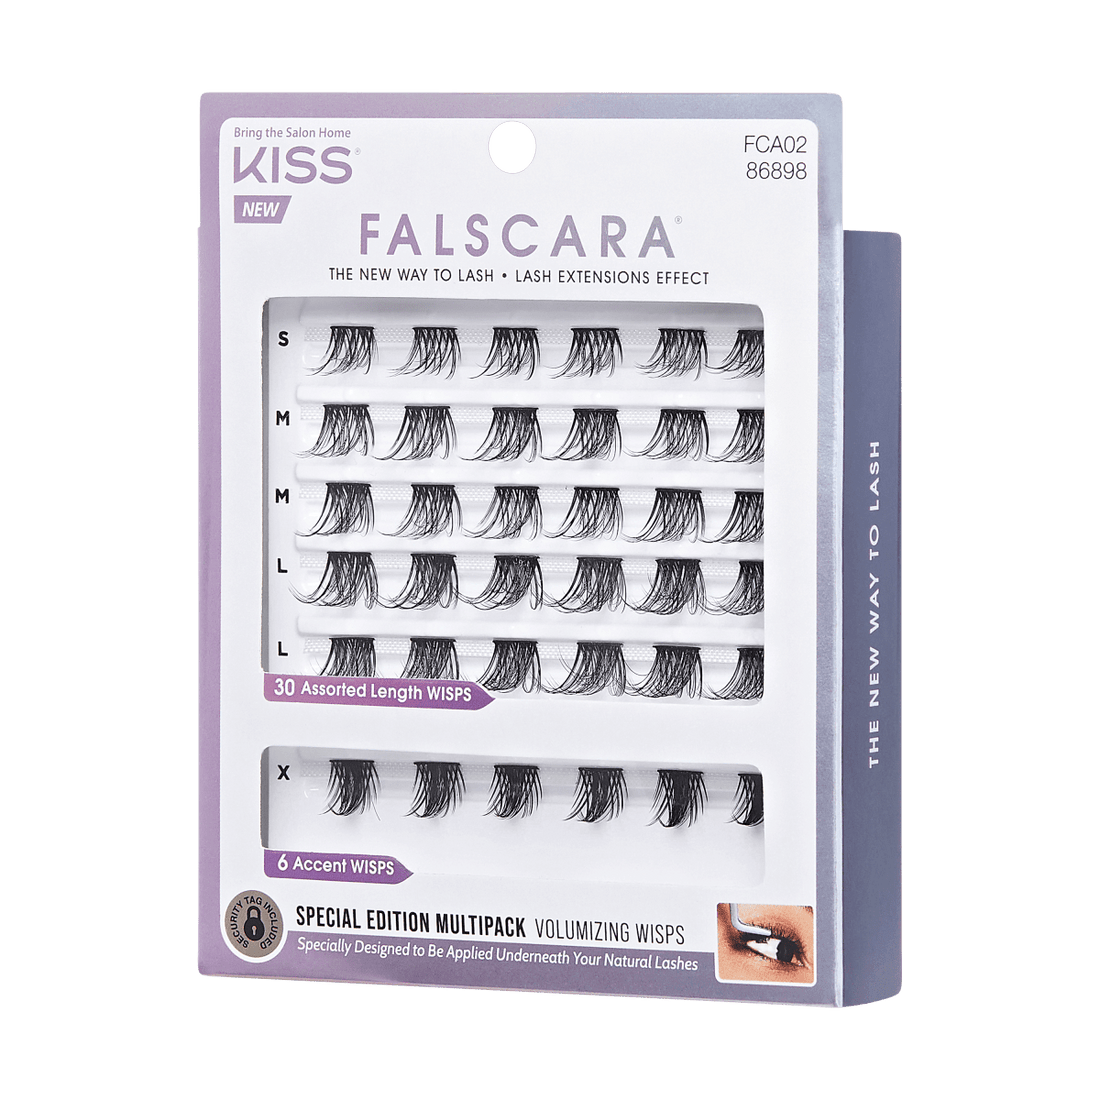 FALSCARA Wisps Special Edition Multipack - Volumizing